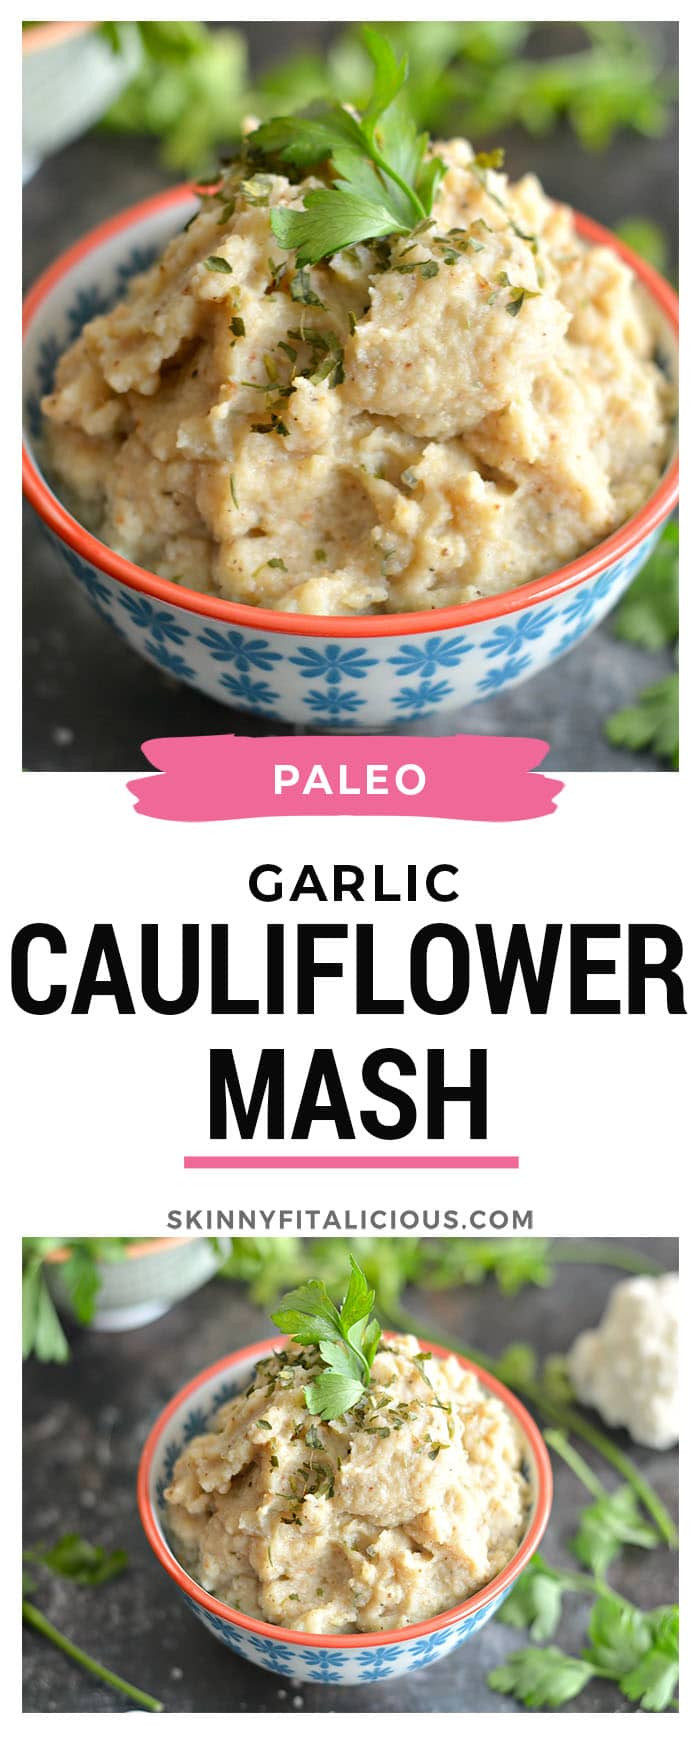 Low Calorie Cauliflower Mashed Potatoes
 Paleo Roasted Garlic Cauliflower Mash Skinny Fitalicious